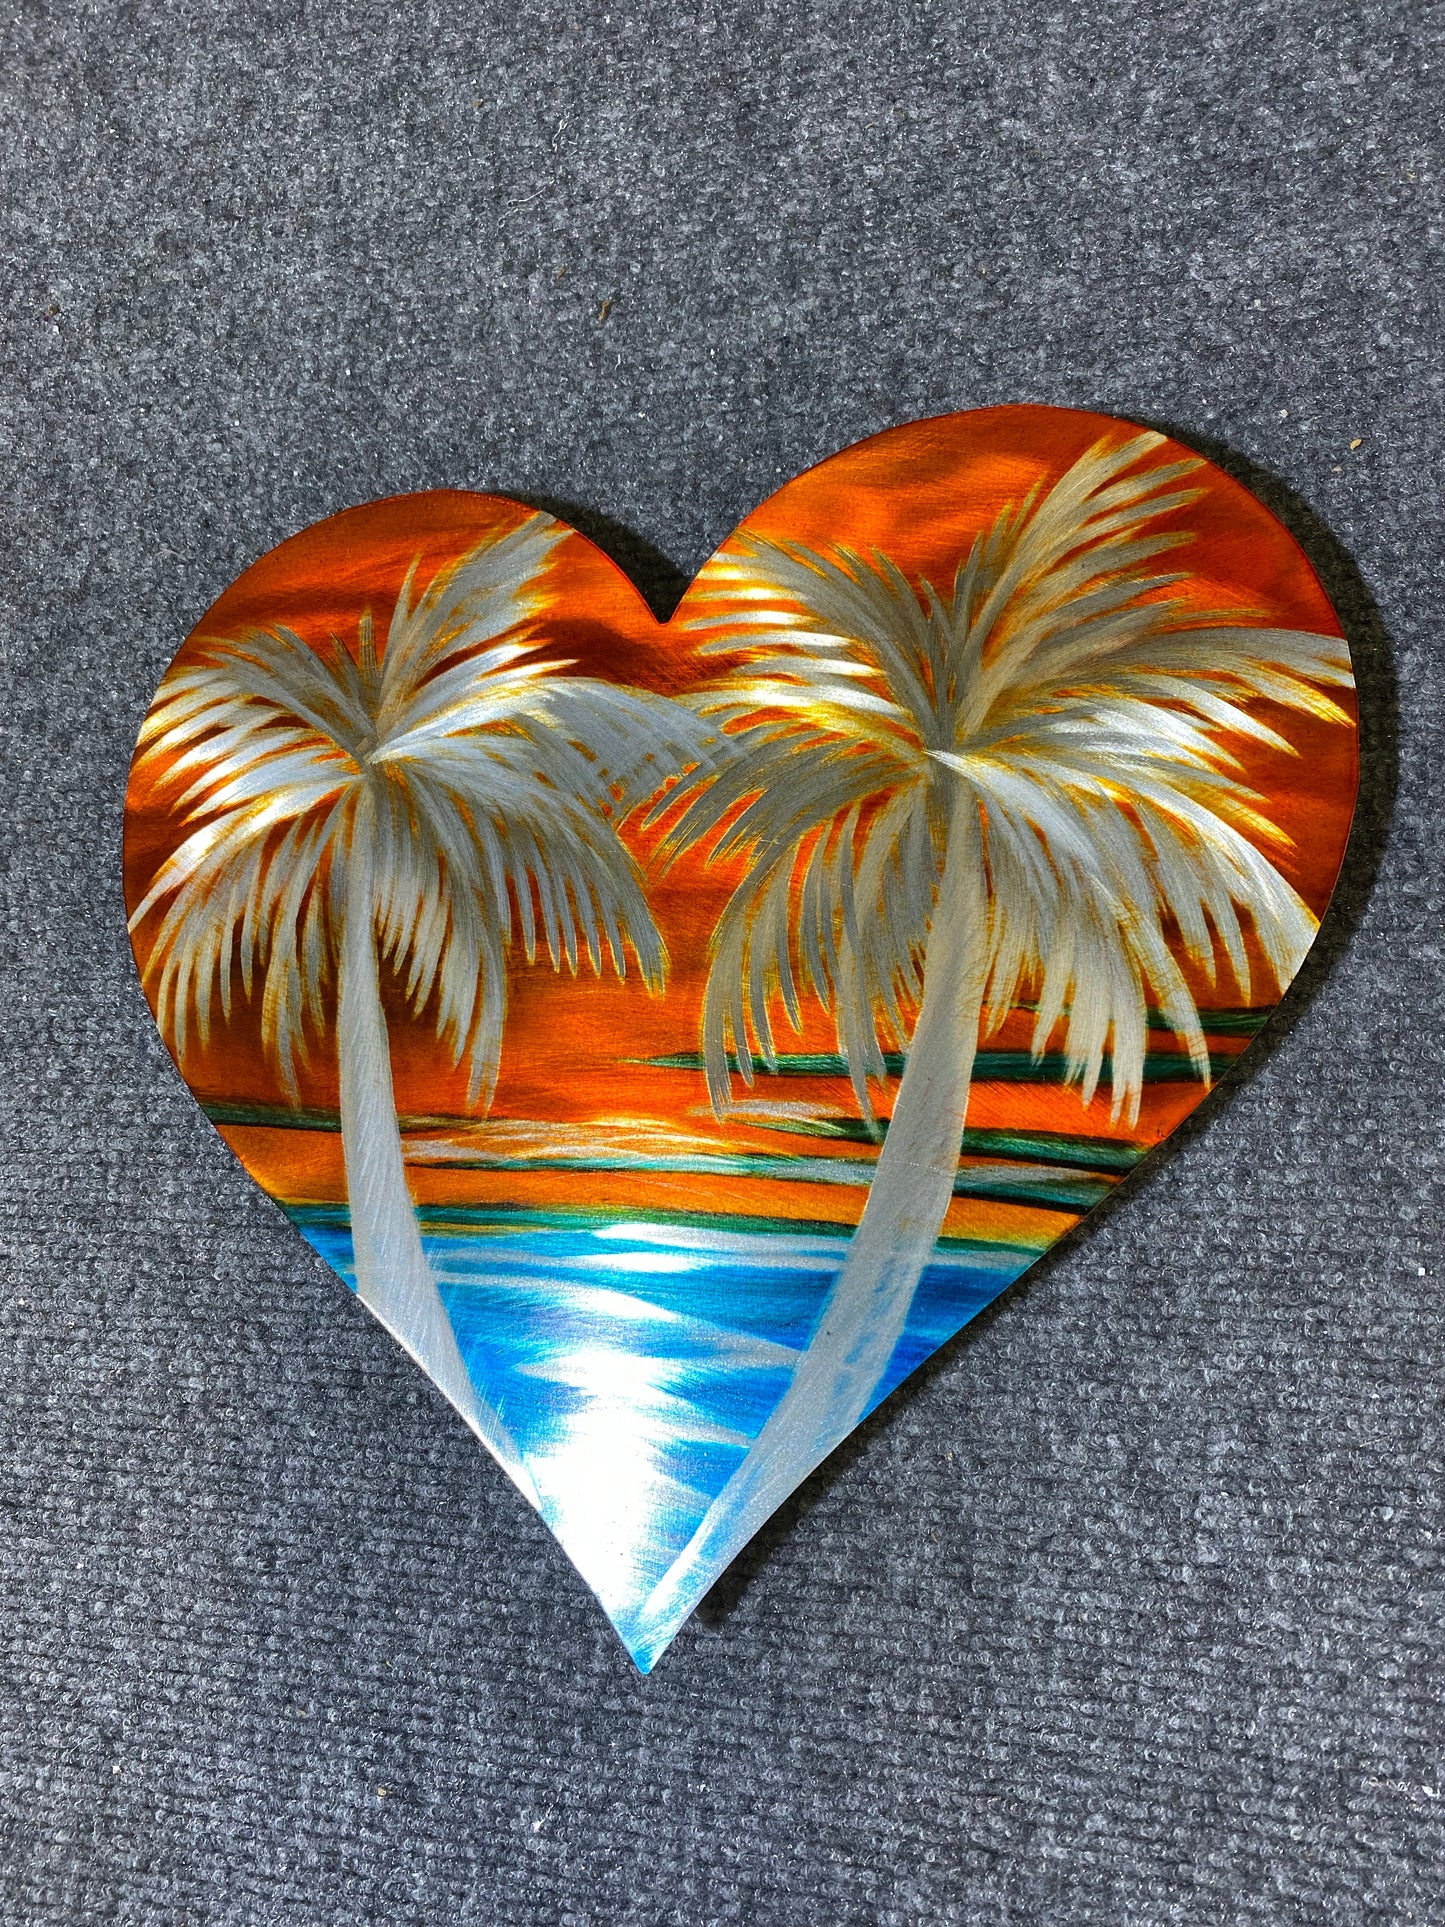 Palm Tree Hearts PETE KOZA METAL ART